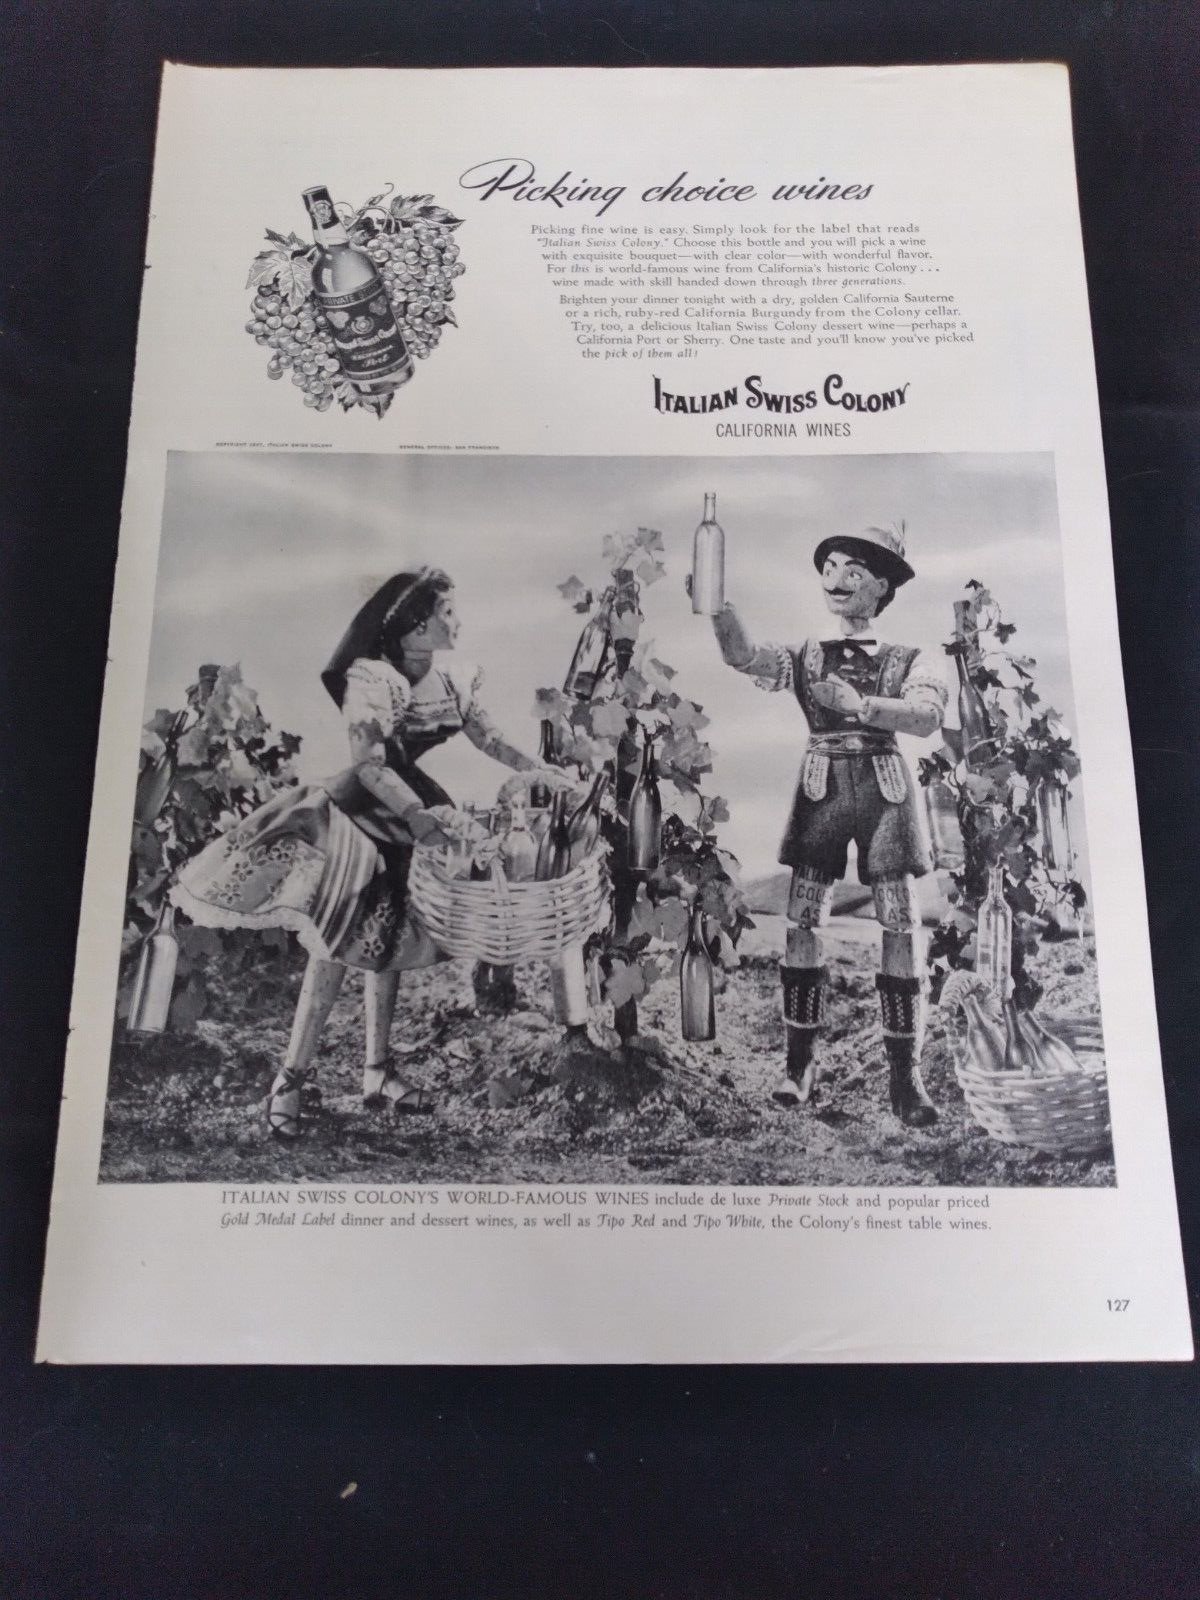 1947 Italian Swiss Colony California Wine Vintage Ad Picking Choice Wines